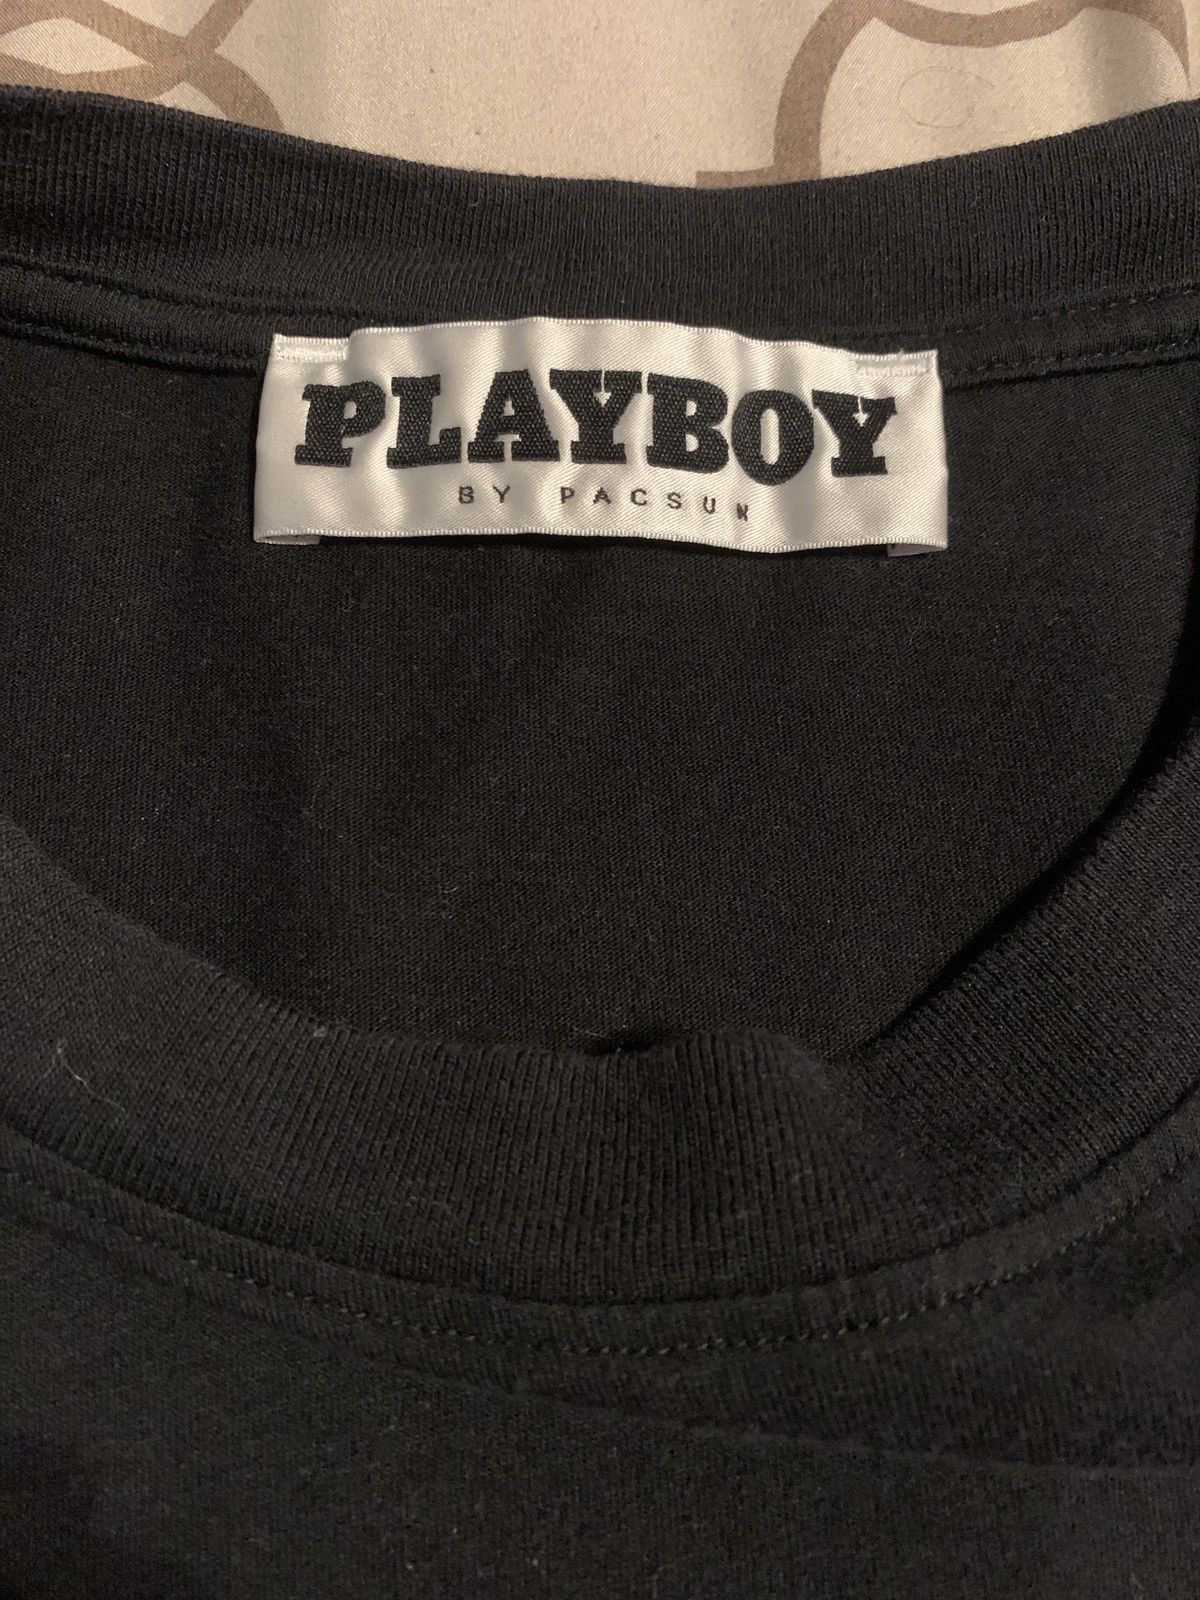 Playboy playboy long sleeve Size US M / EU 48-50 / 2 - 3 Preview